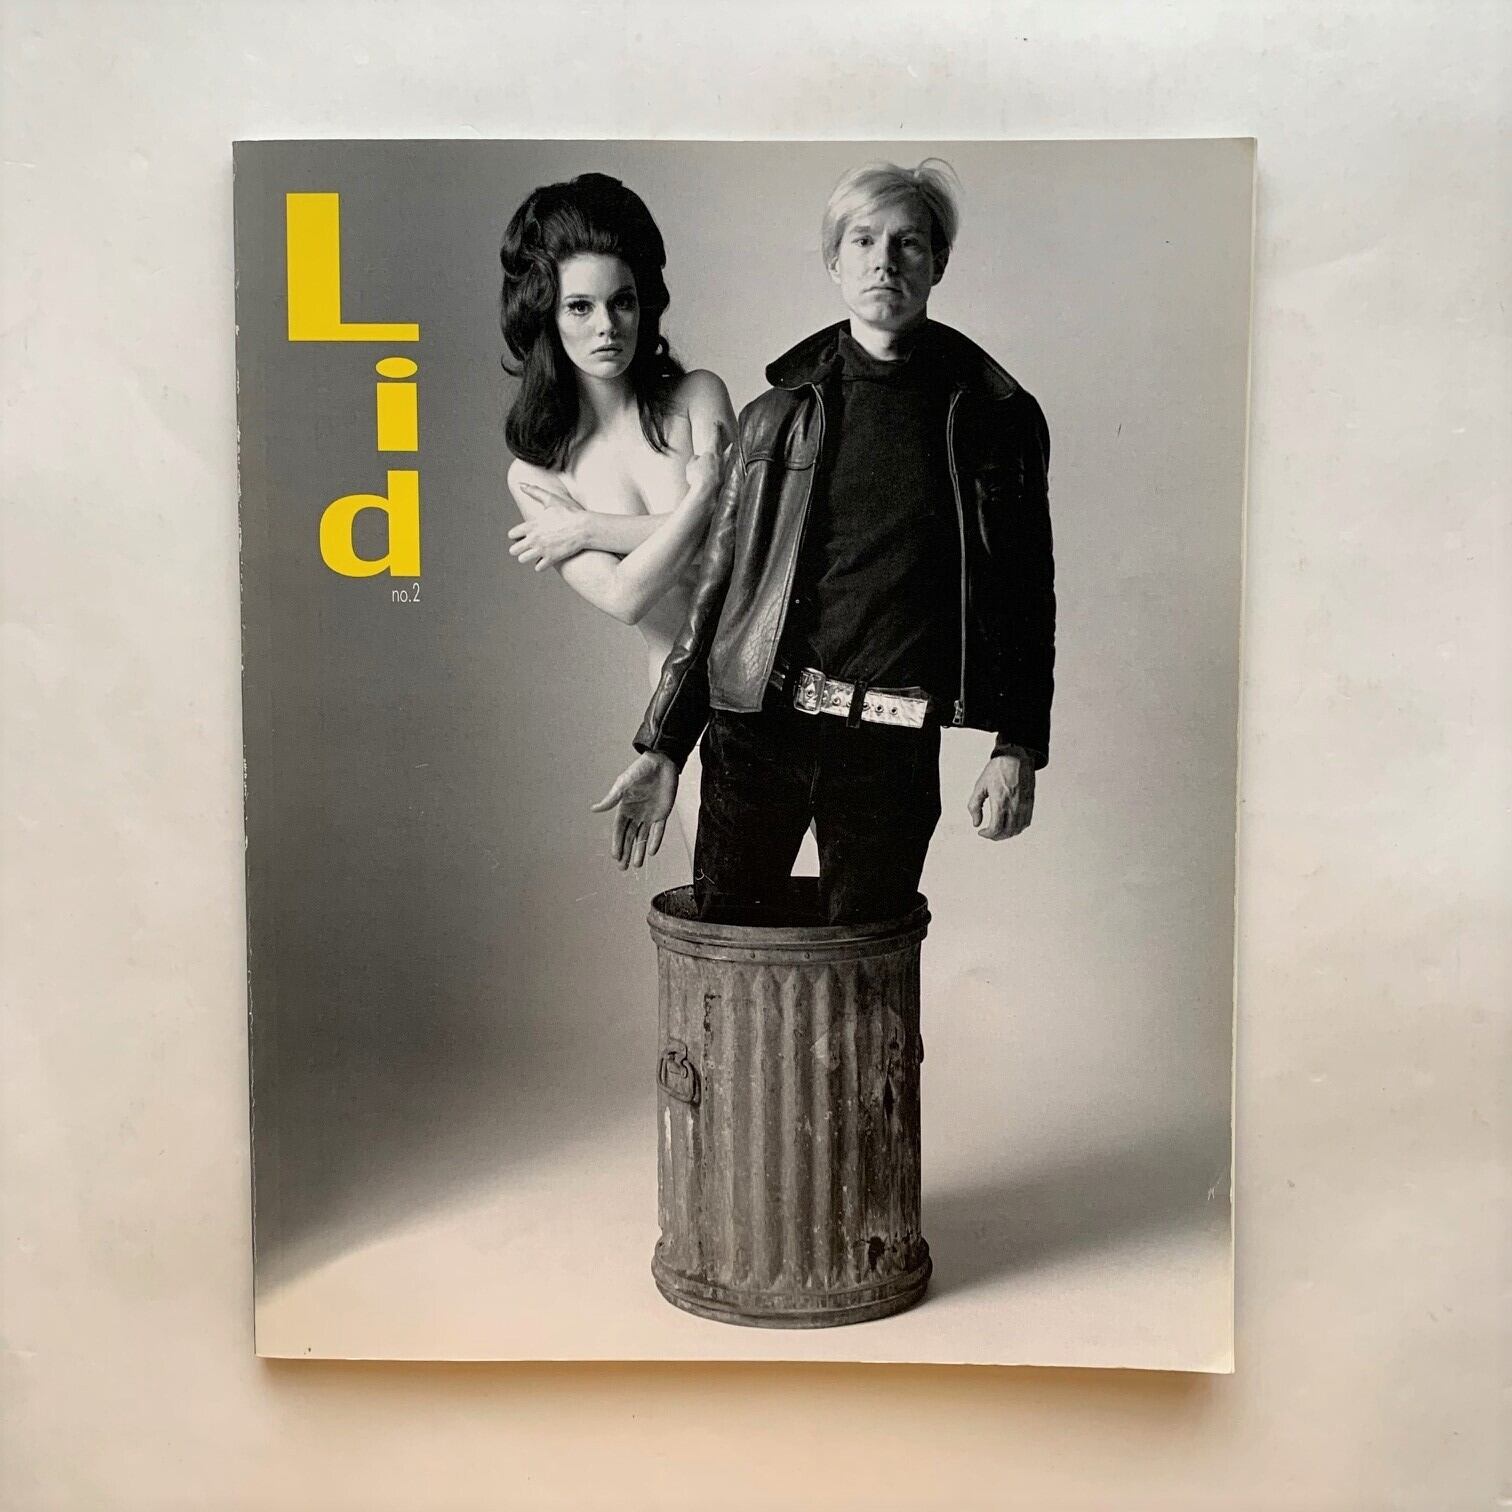 Lid no. 2. / Lid Magazine